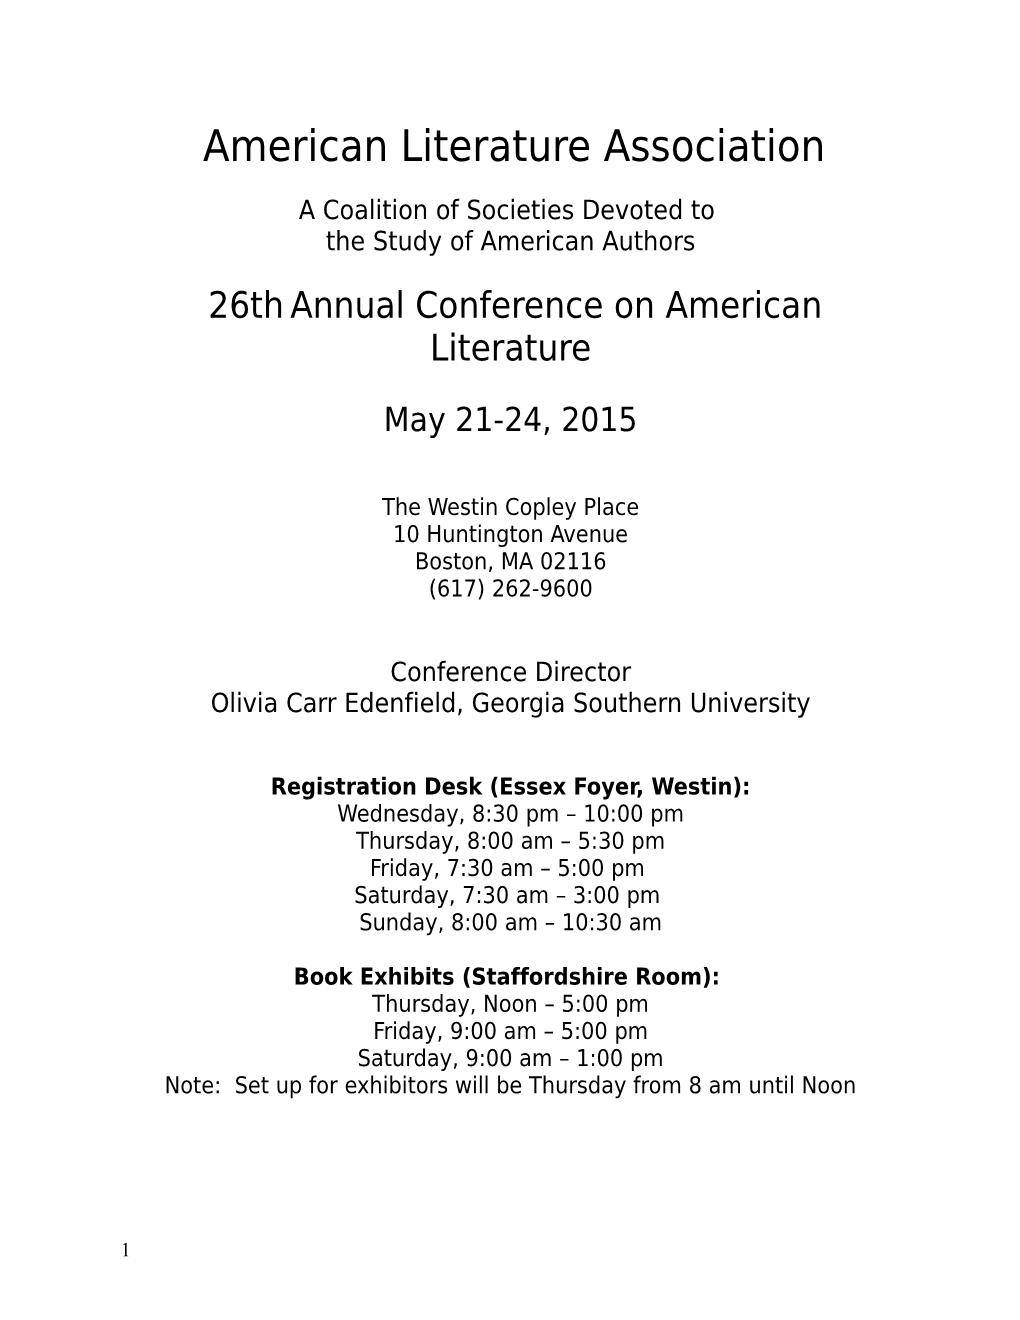 American Literature Association